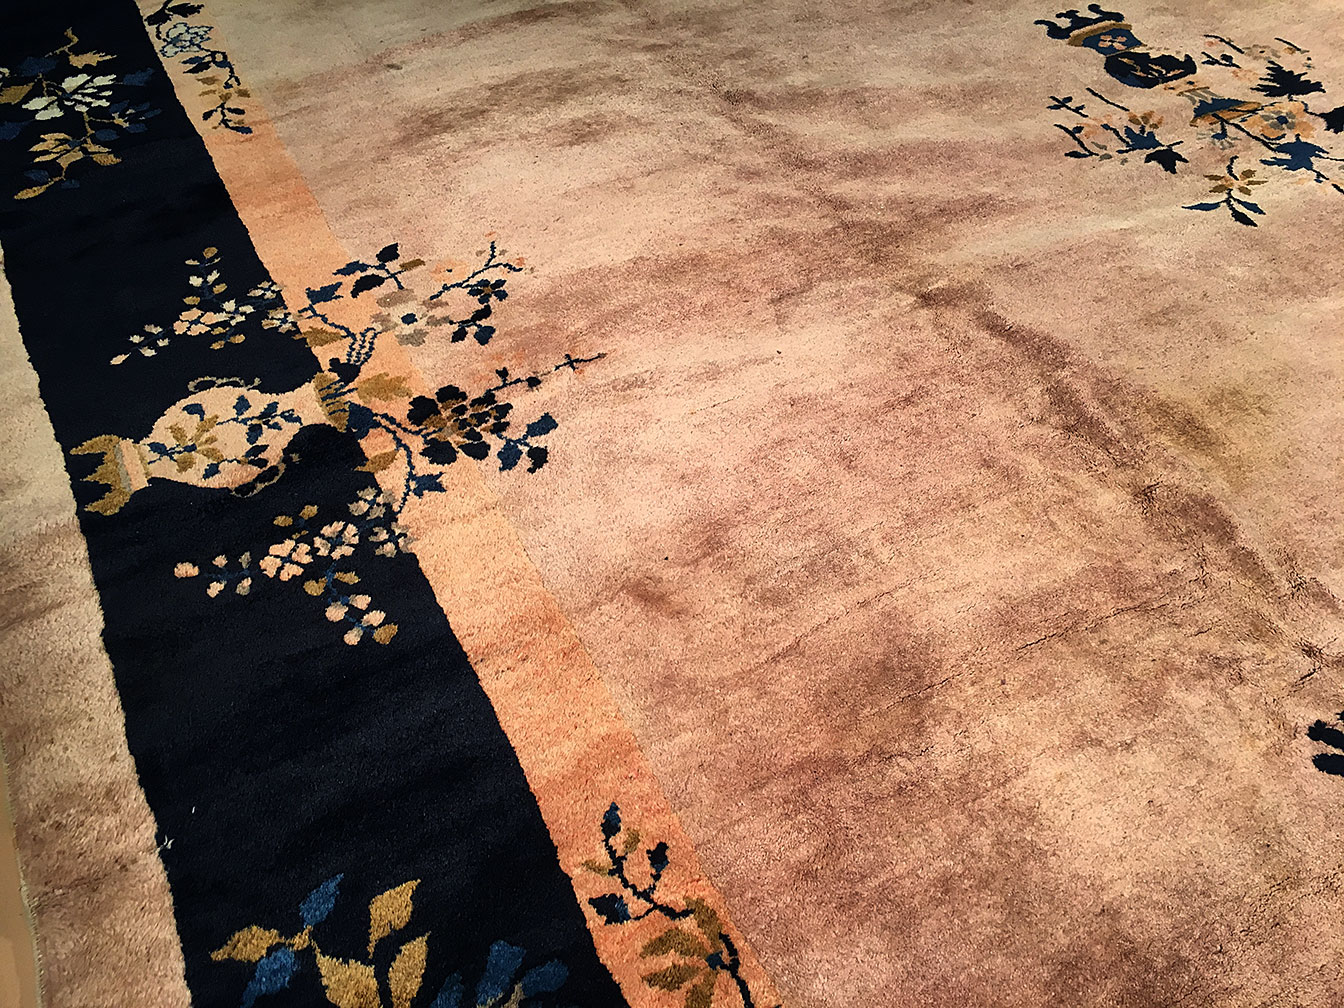 Antique chinese Carpet - # 53335